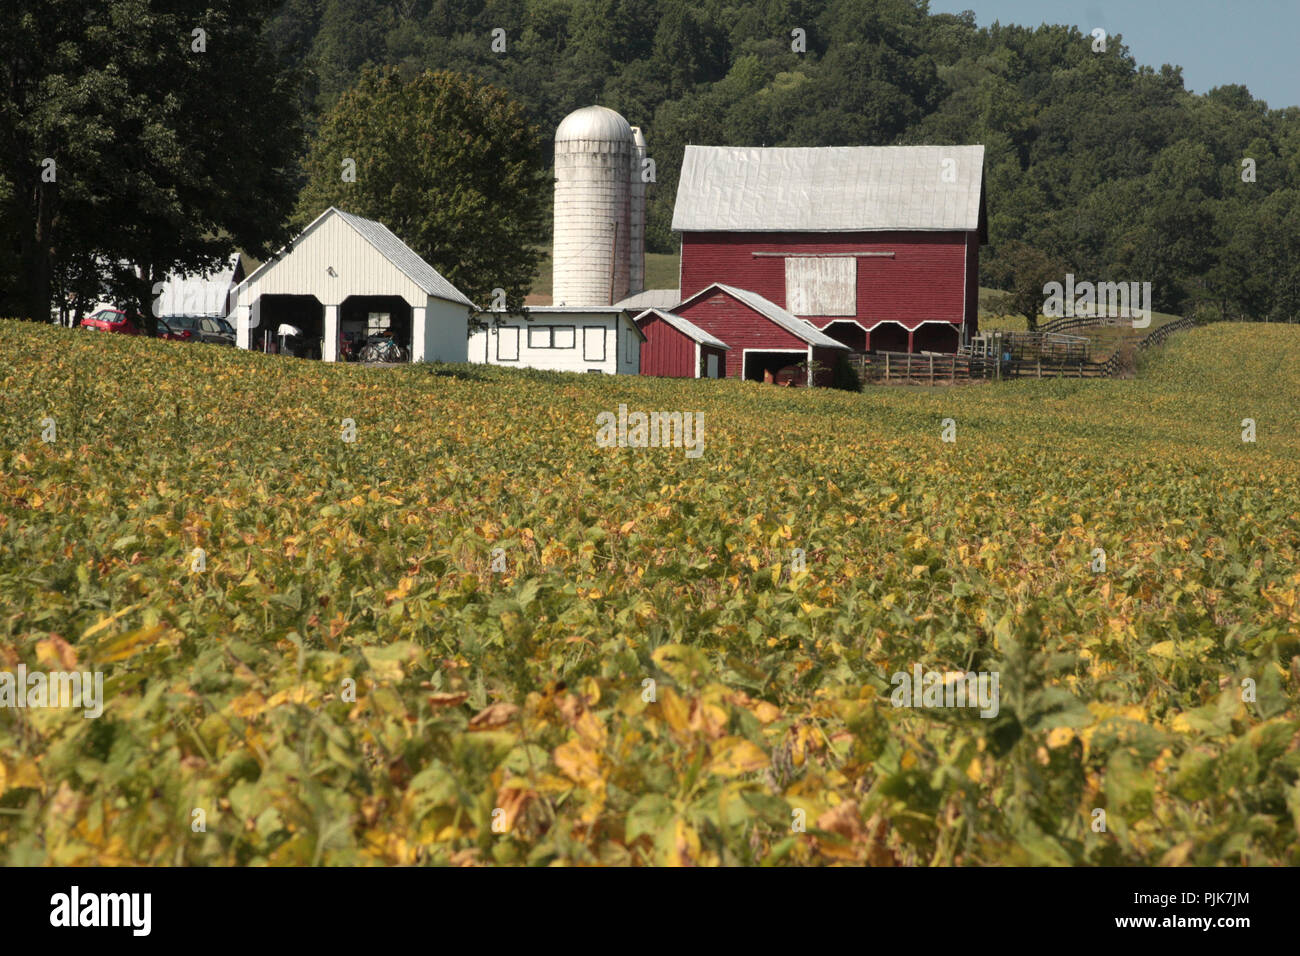 Farm in rural Virginia, USA. Soybean culture. Stock Photo